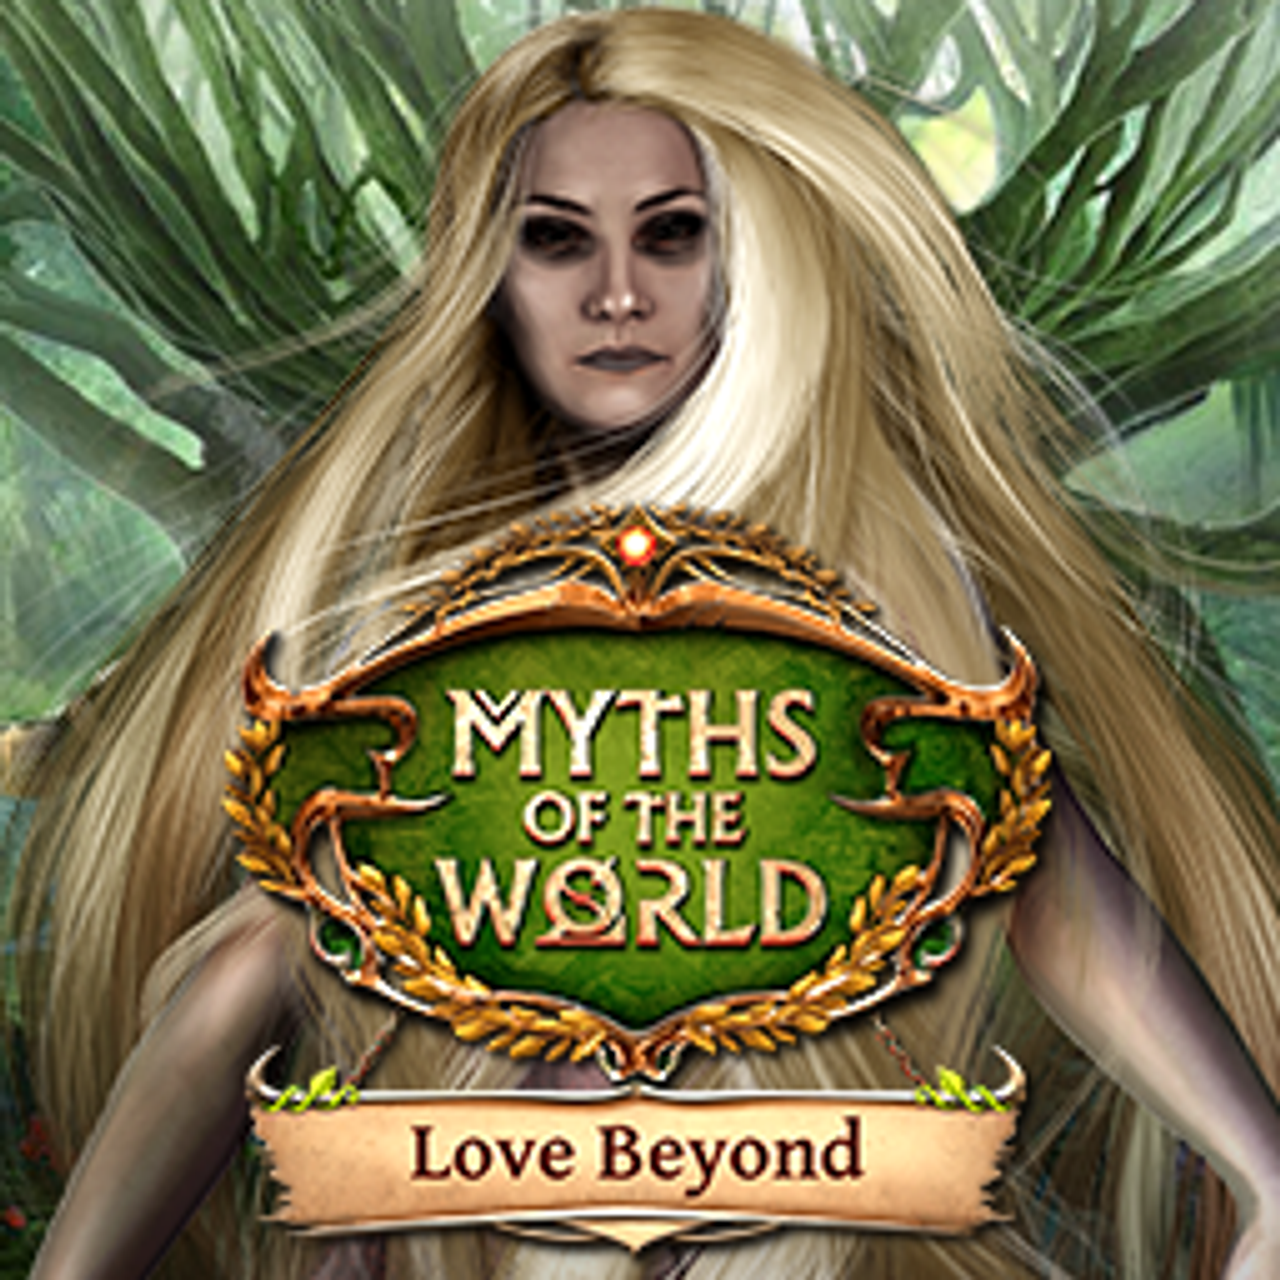 Myths of the World: Love Beyond